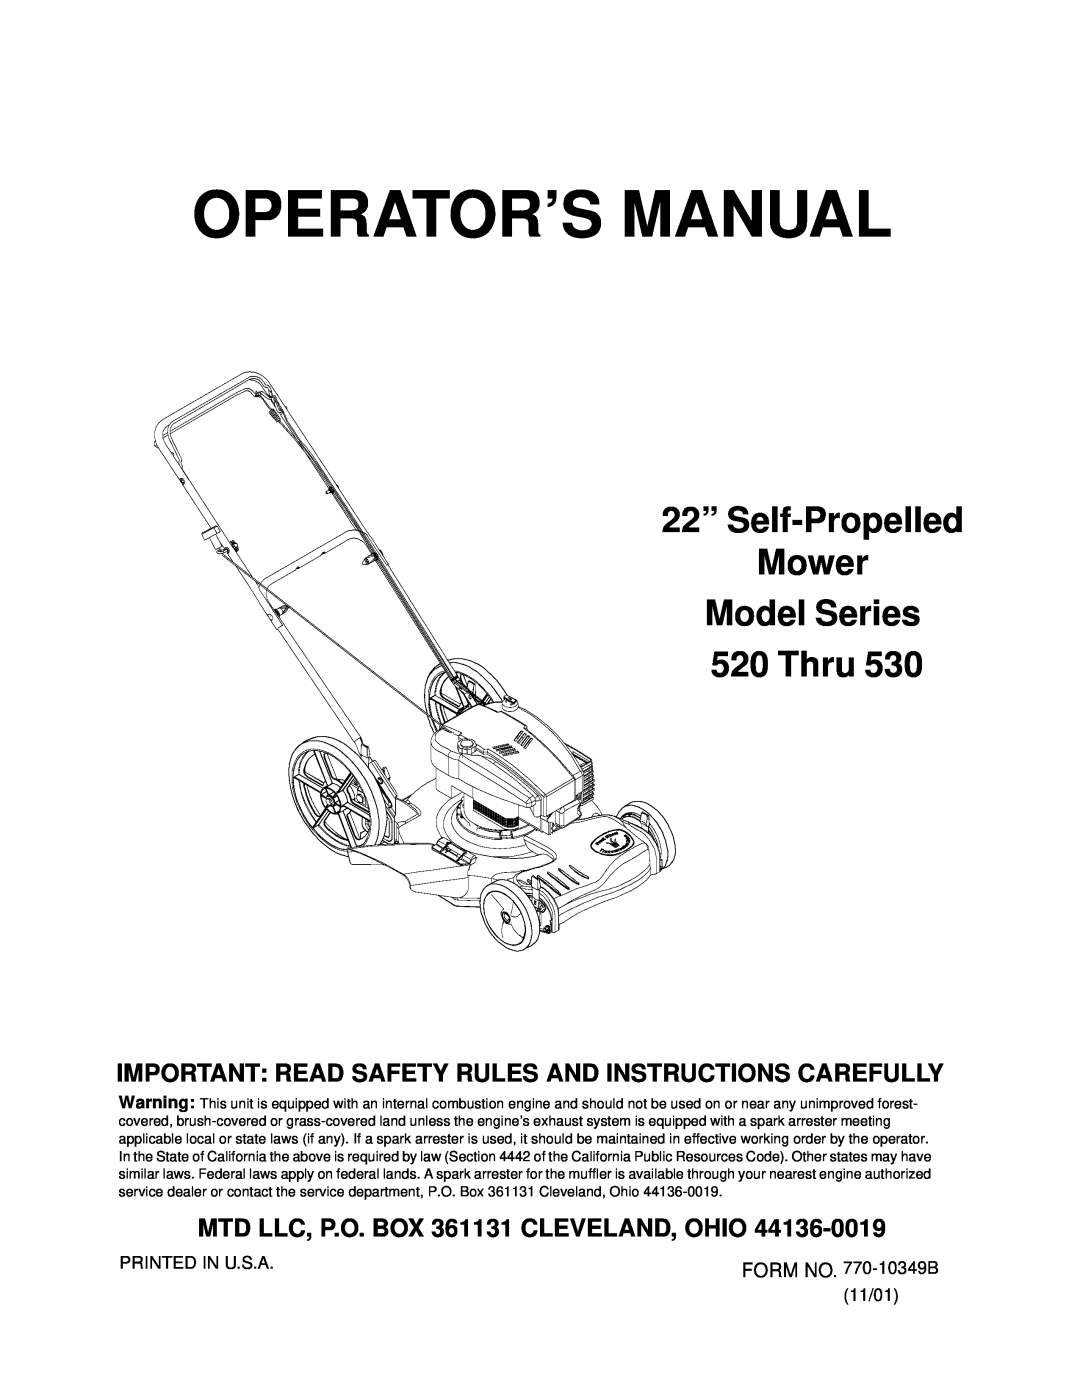 MTD manual Operator’S Manual, 22” Self-Propelled Mower Model Series 520 Thru, MTD LLC, P.O. BOX 361131 CLEVELAND, OHIO 